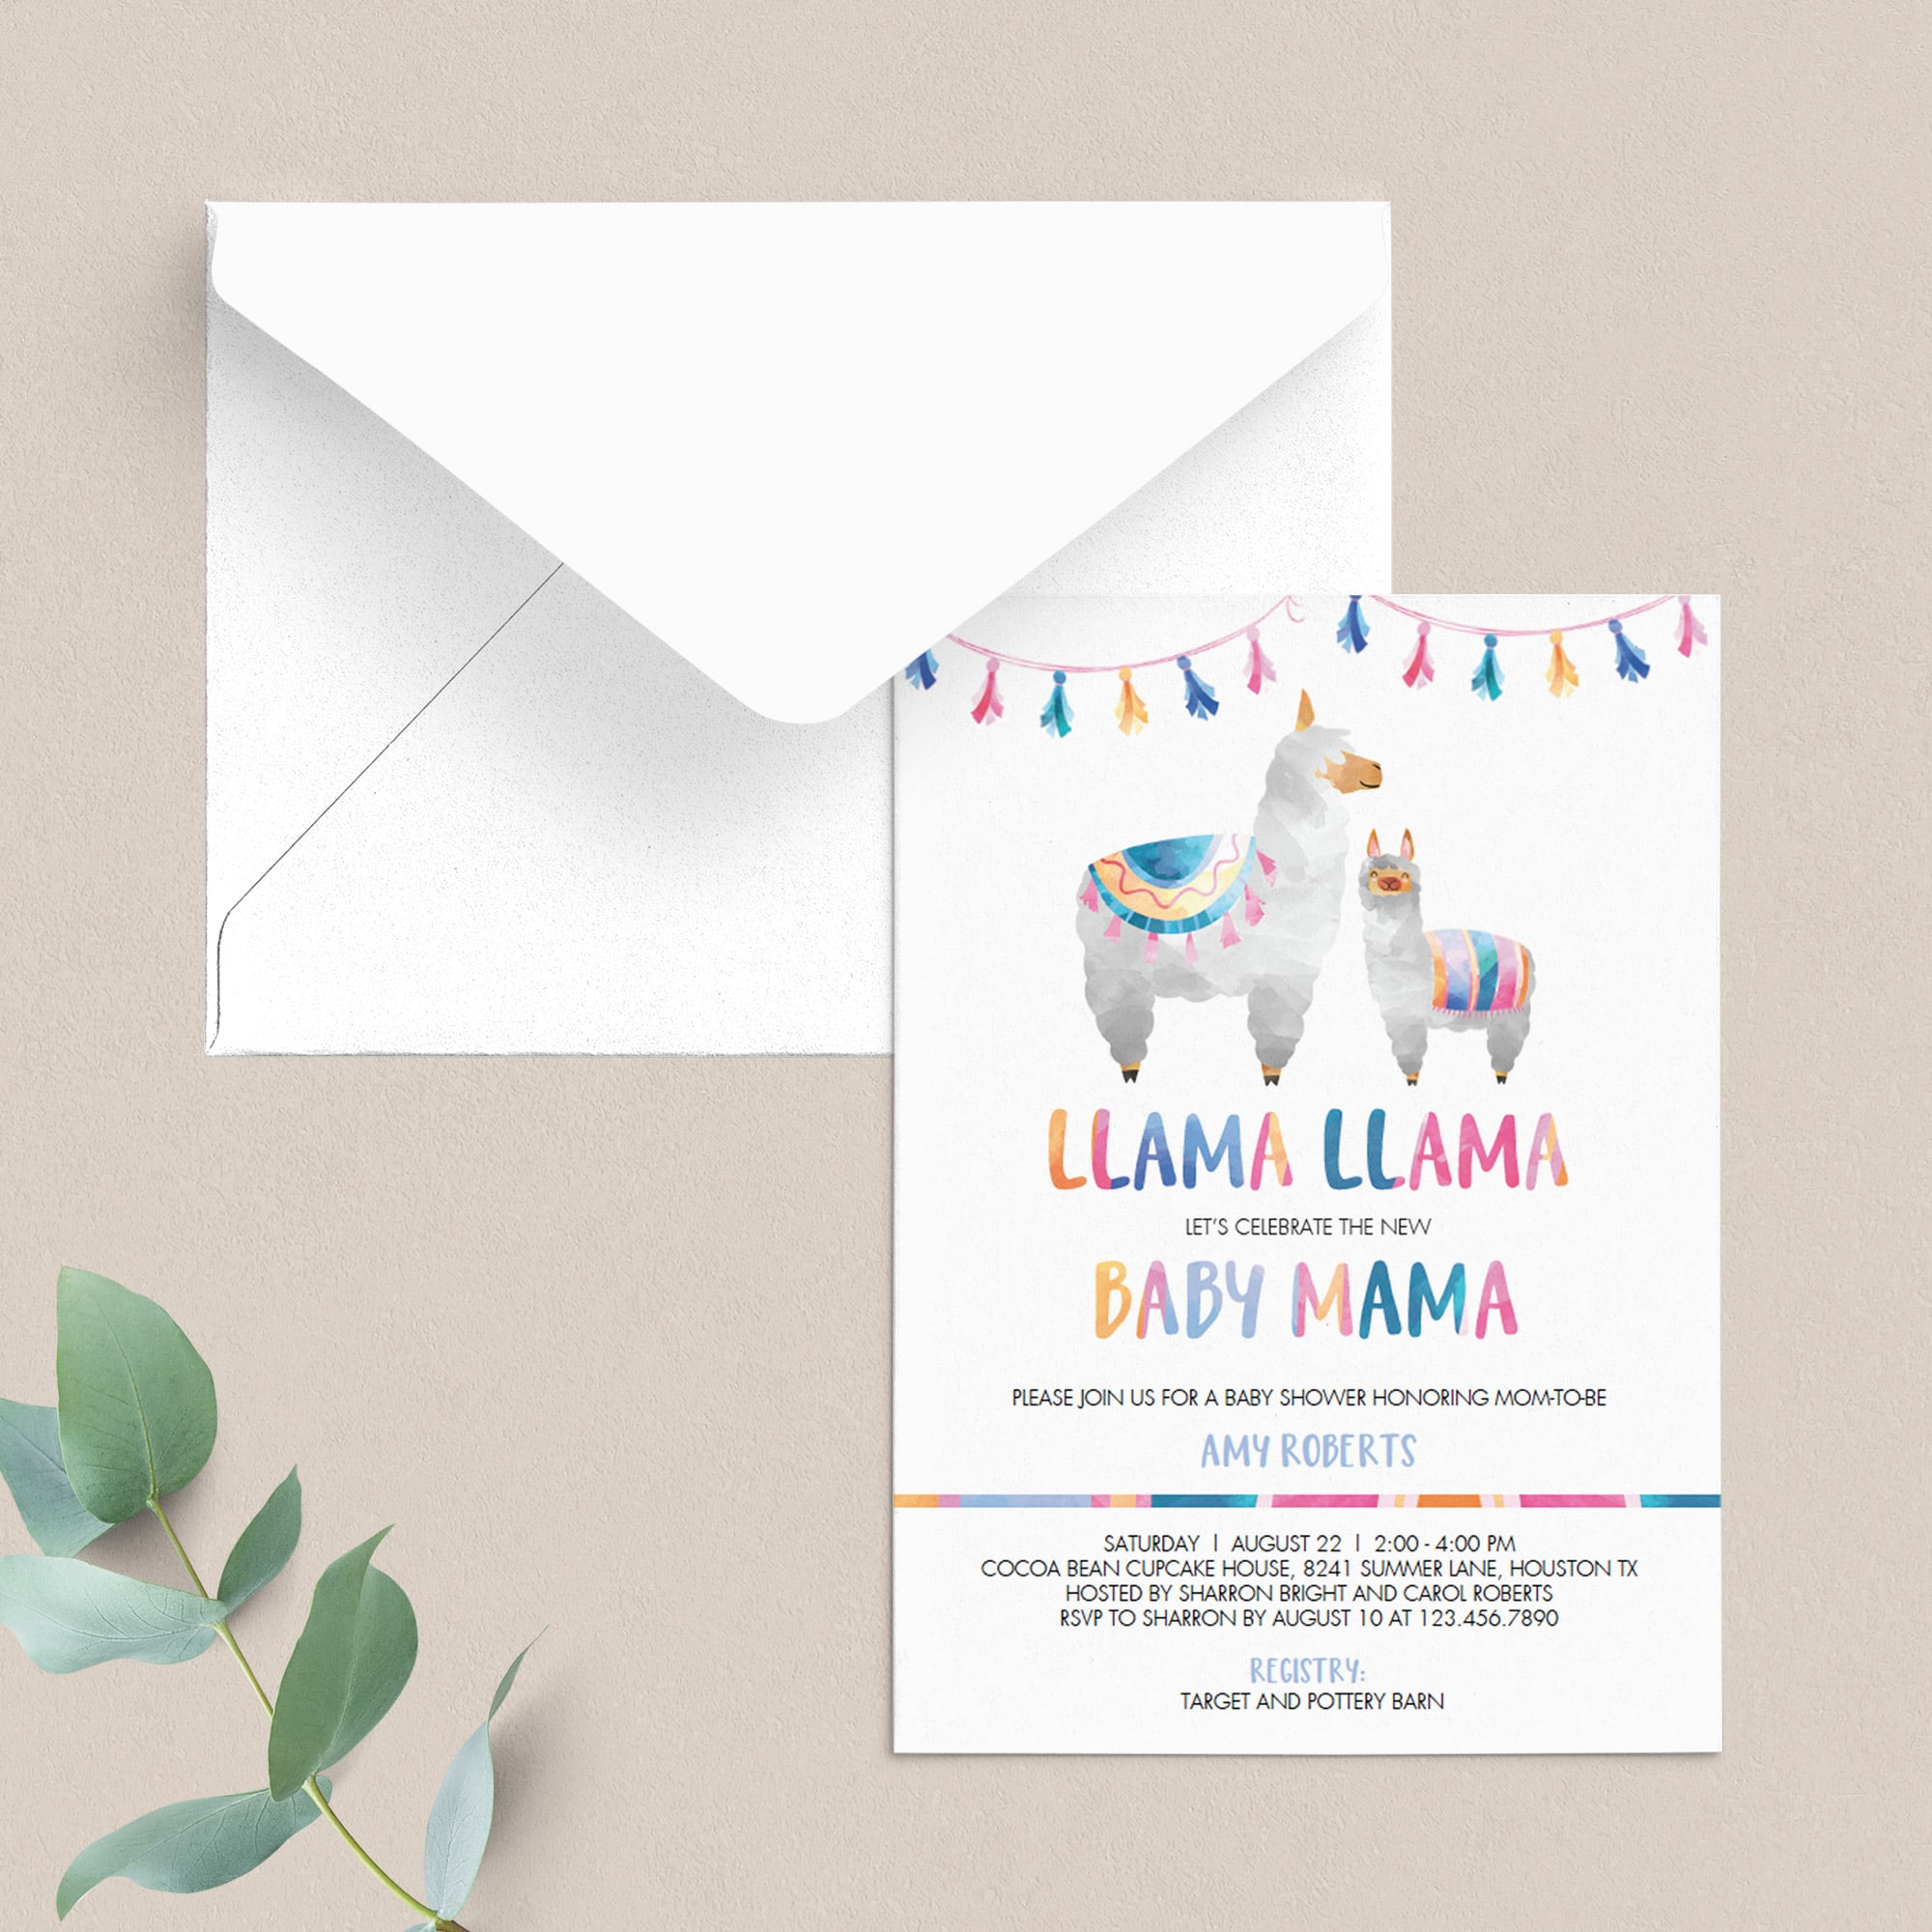 Llama mama baby shower invitation template by LittleSizzle